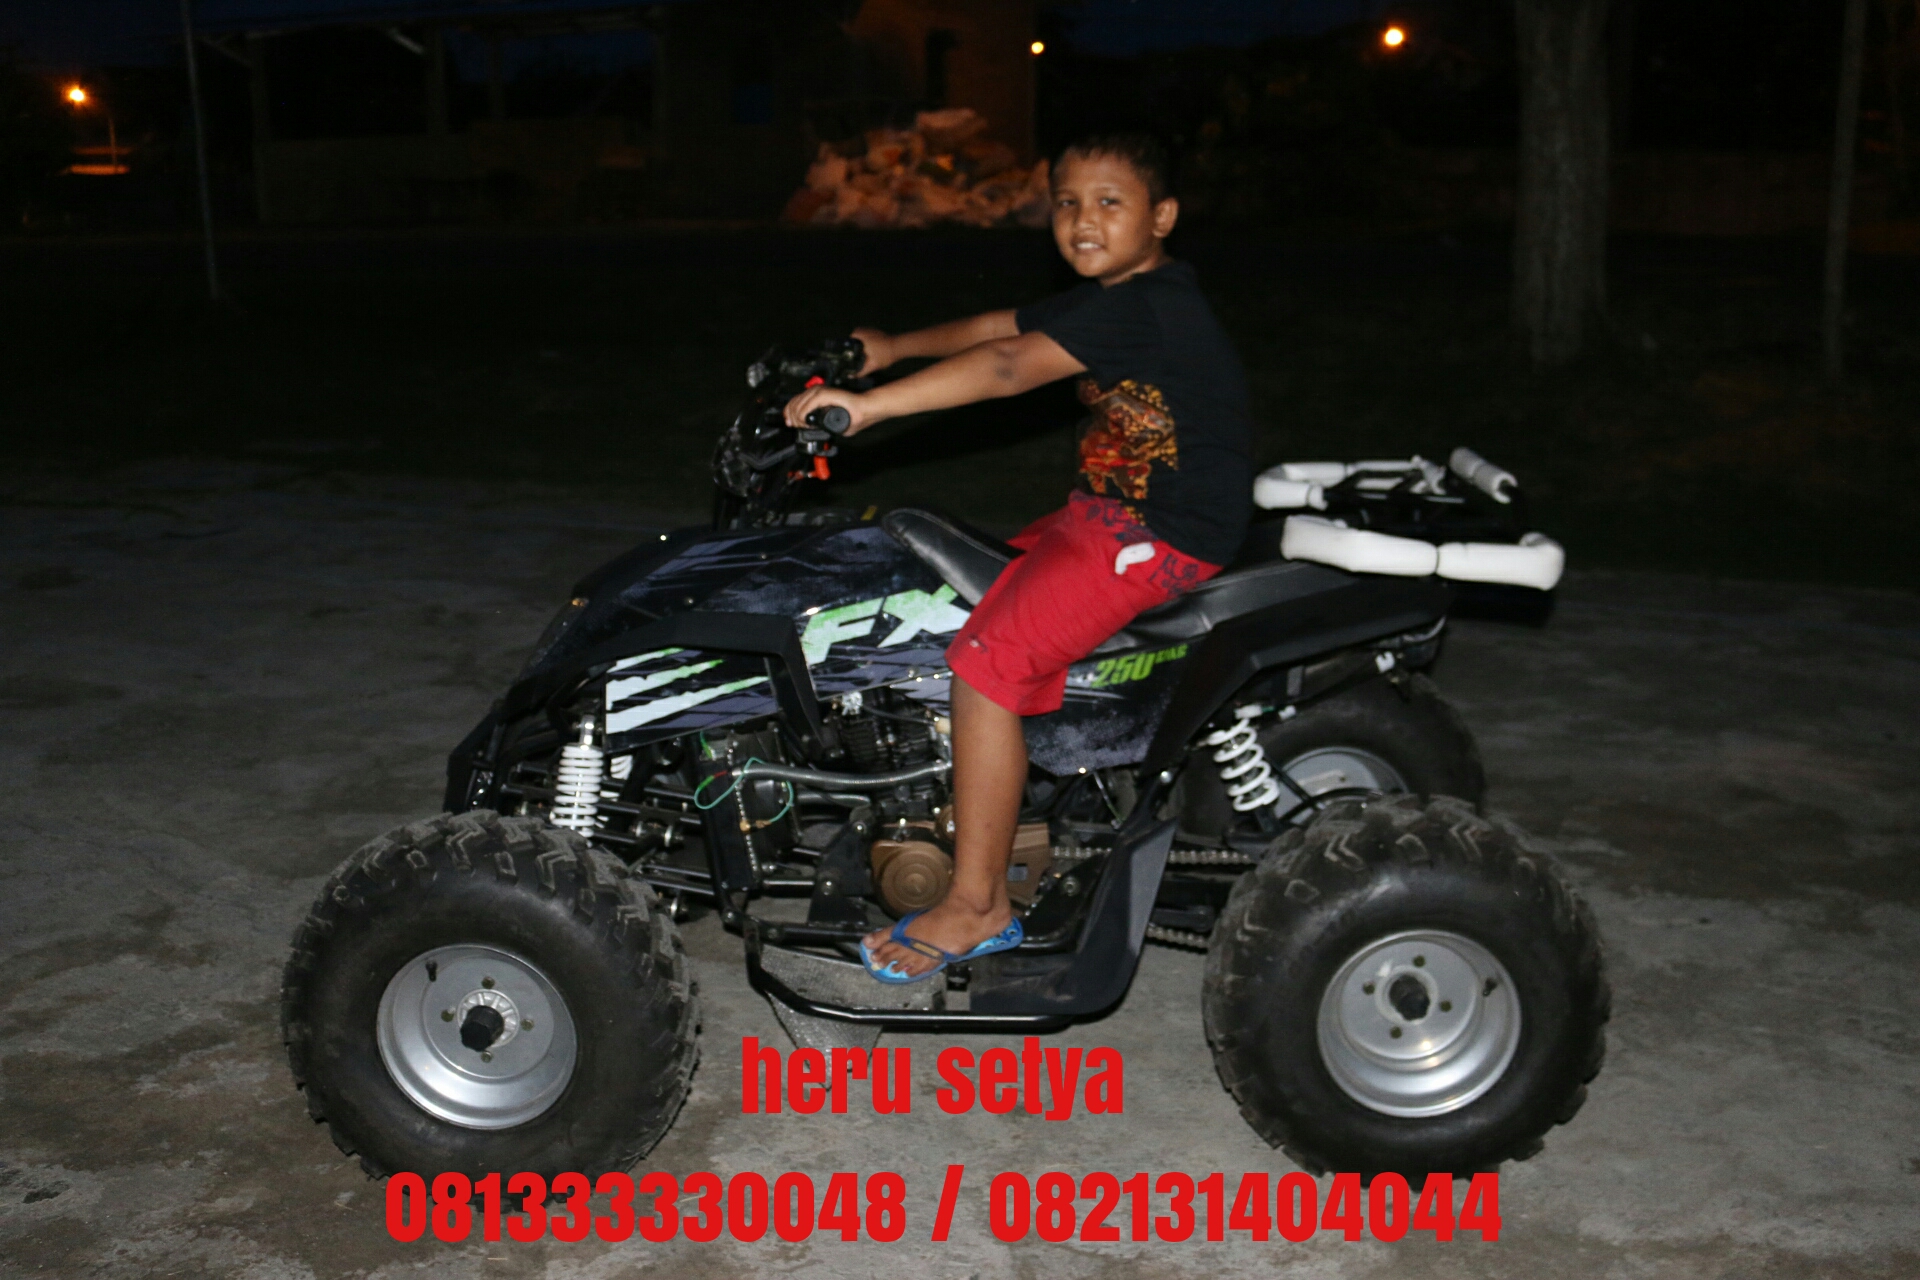 Mei 2016 082131404044 Motor Mini Trail Gp Atv Surabaya Jakarta